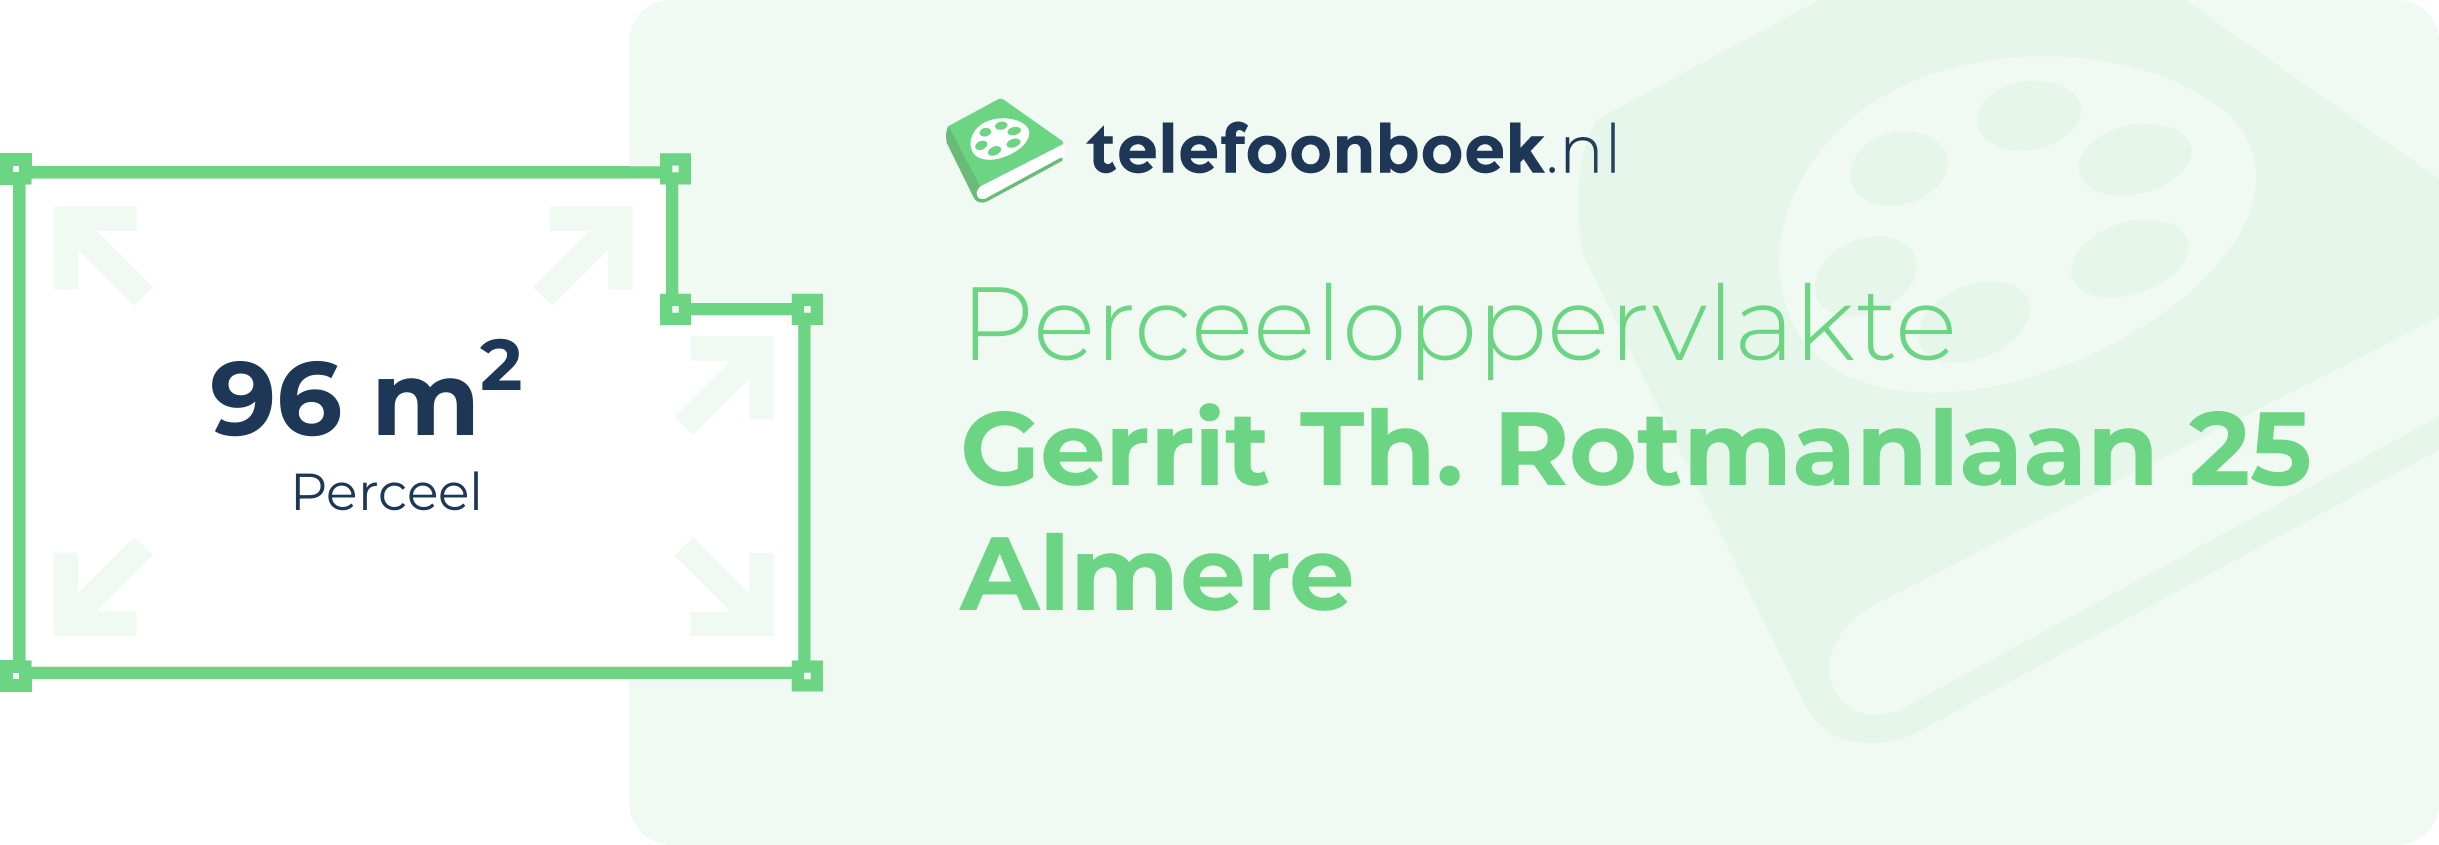 Perceeloppervlakte Gerrit Th. Rotmanlaan 25 Almere